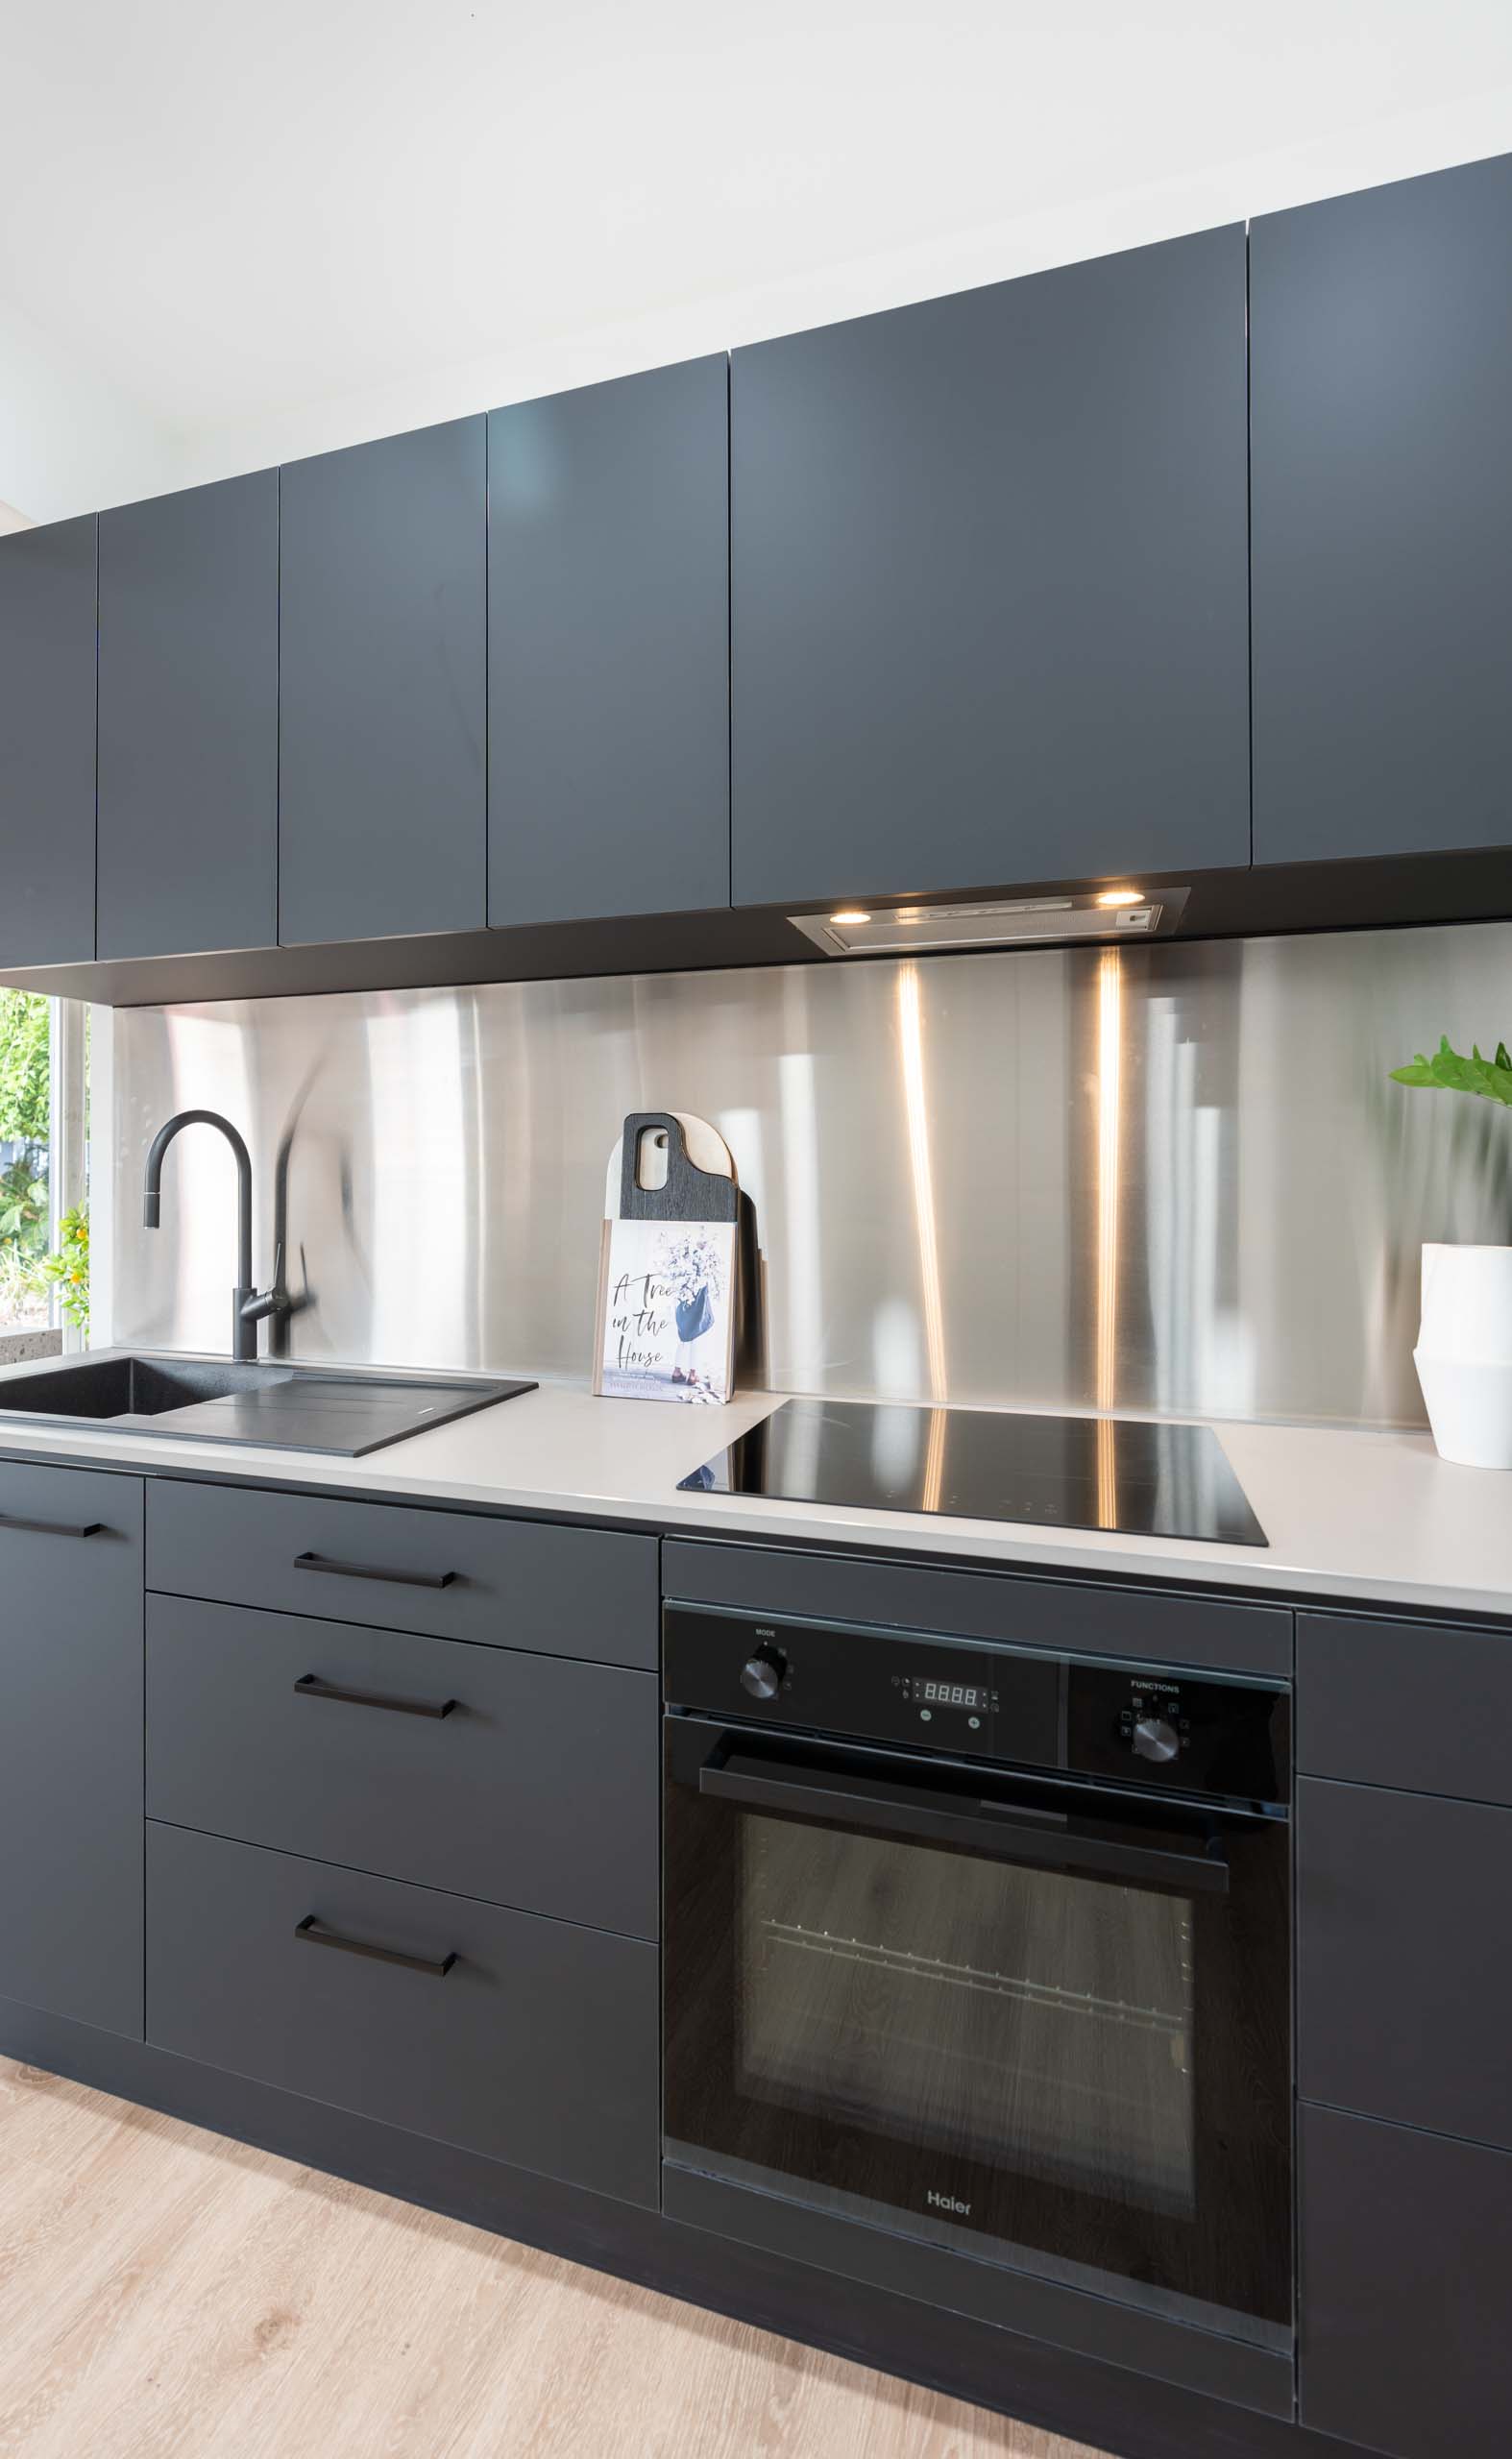 Image of black supermatte kitchen display with black kitchen appliances and stainless steel splashback